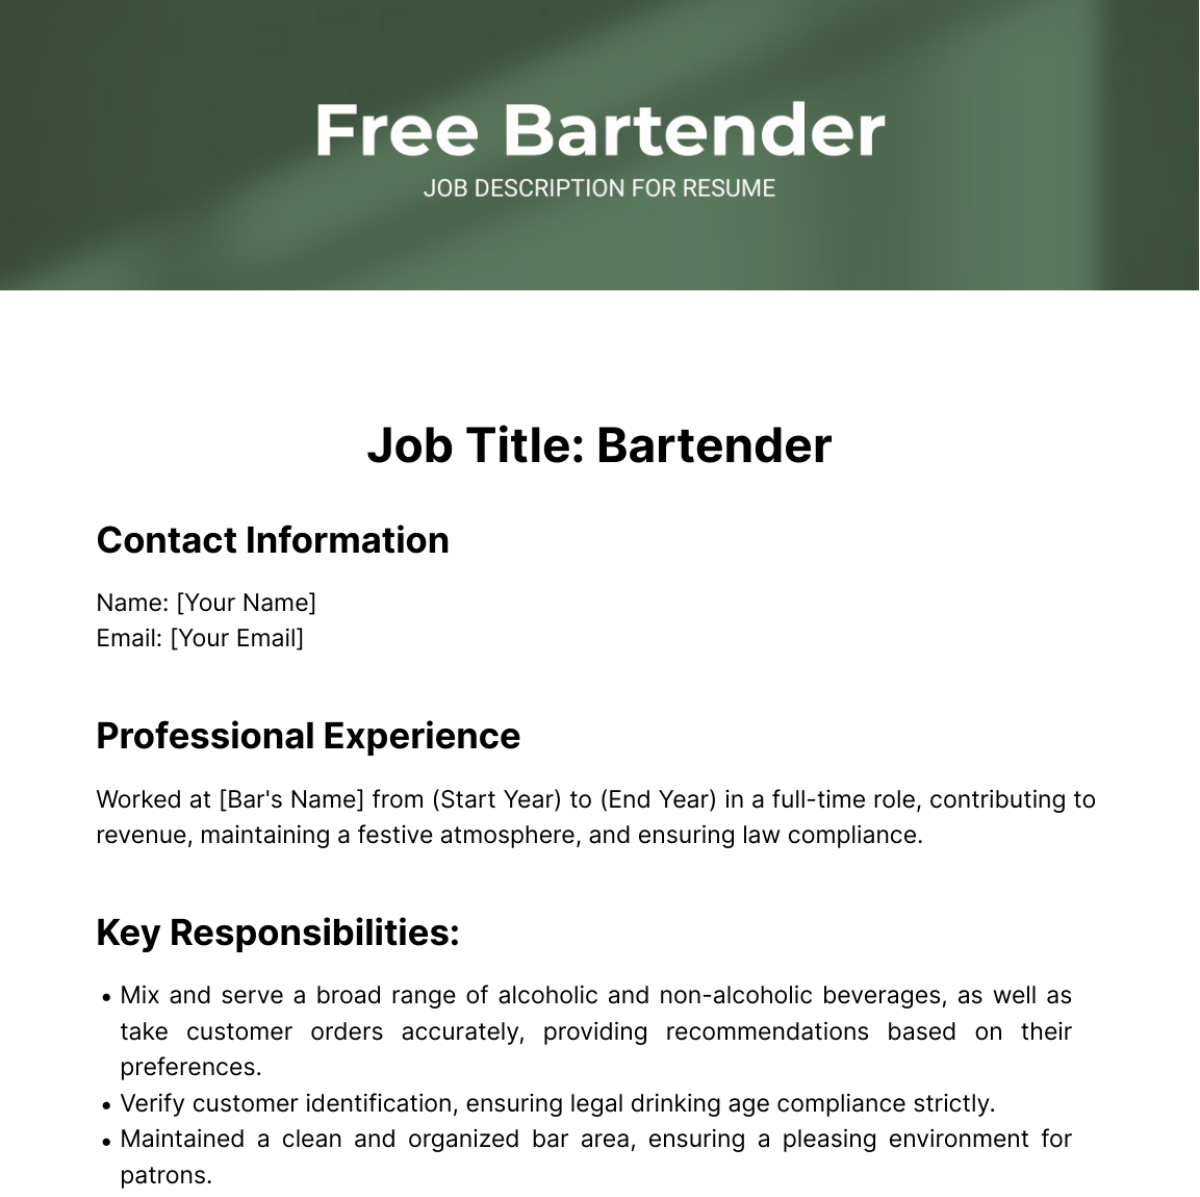 Bartender Job Description for Resume Template